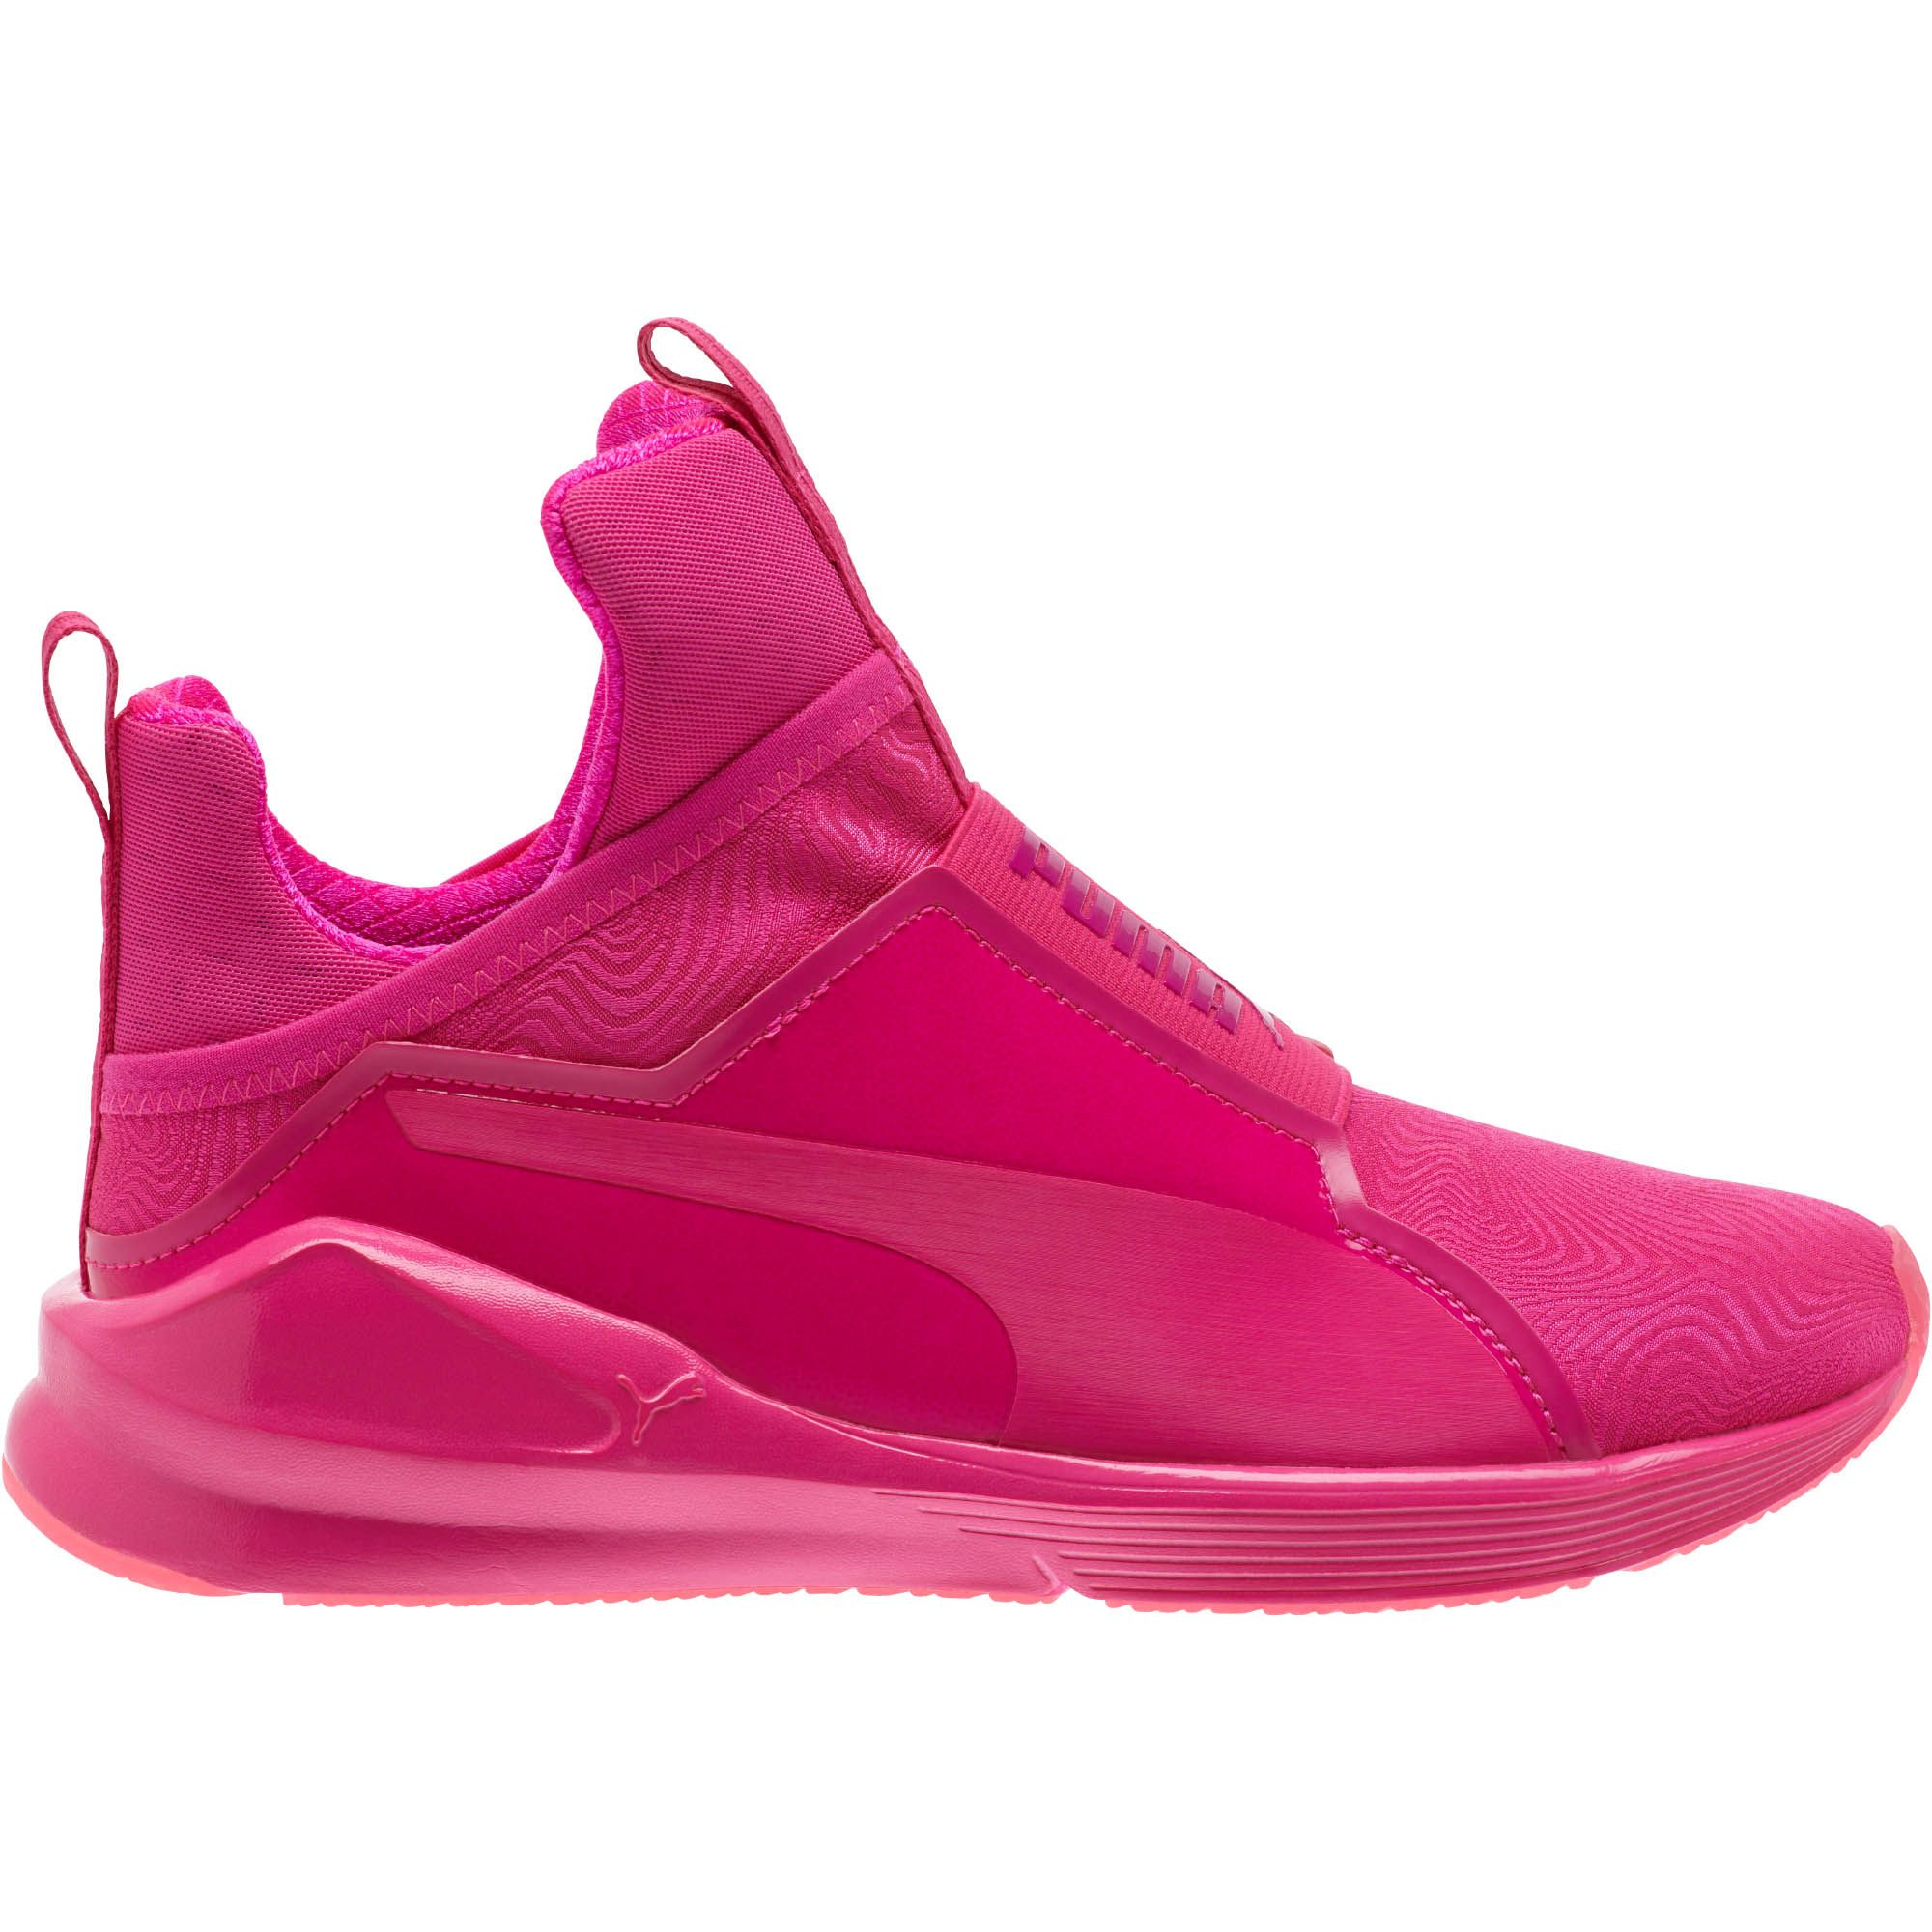 PUMA Rubber Fierce Bright Women's Training Shoes in Pink - Lyst